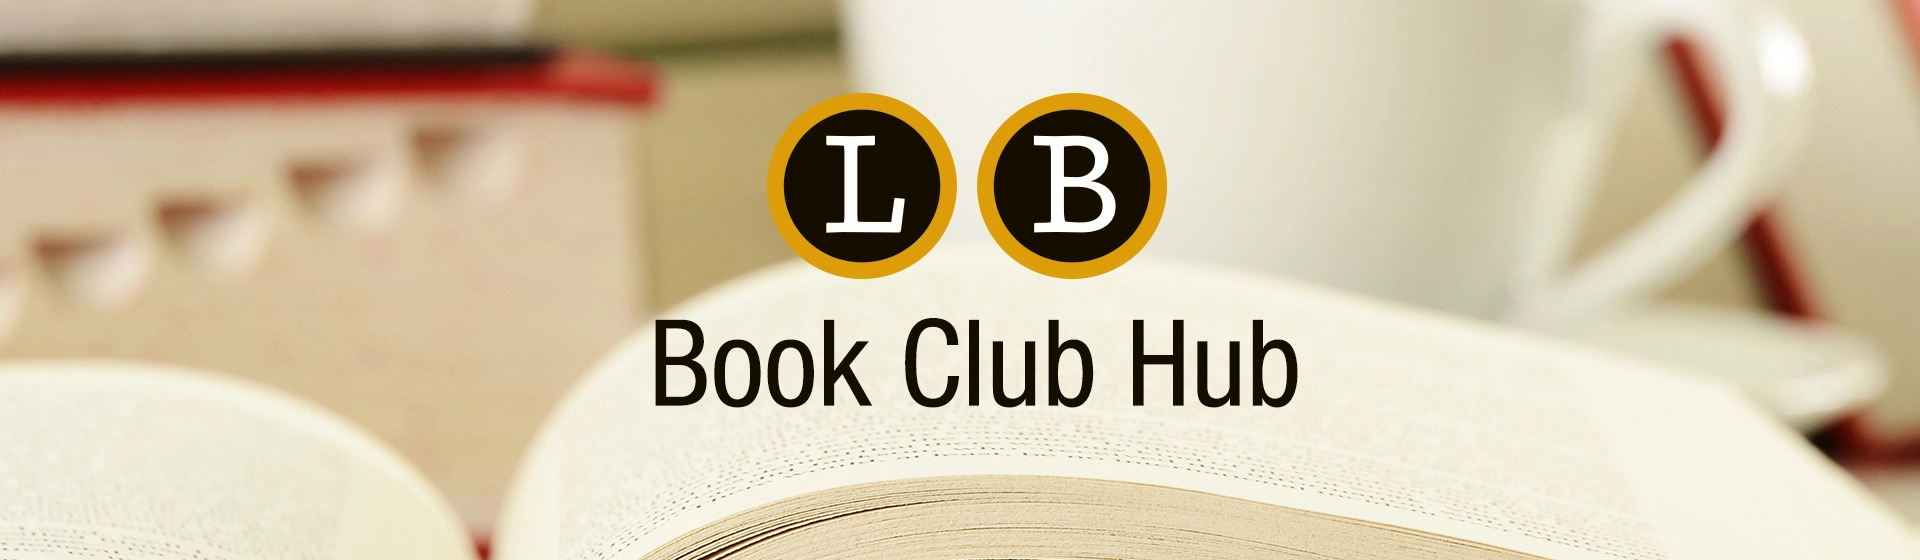 HBGImprints Little Brown Header Book Club Hub ?resize=160